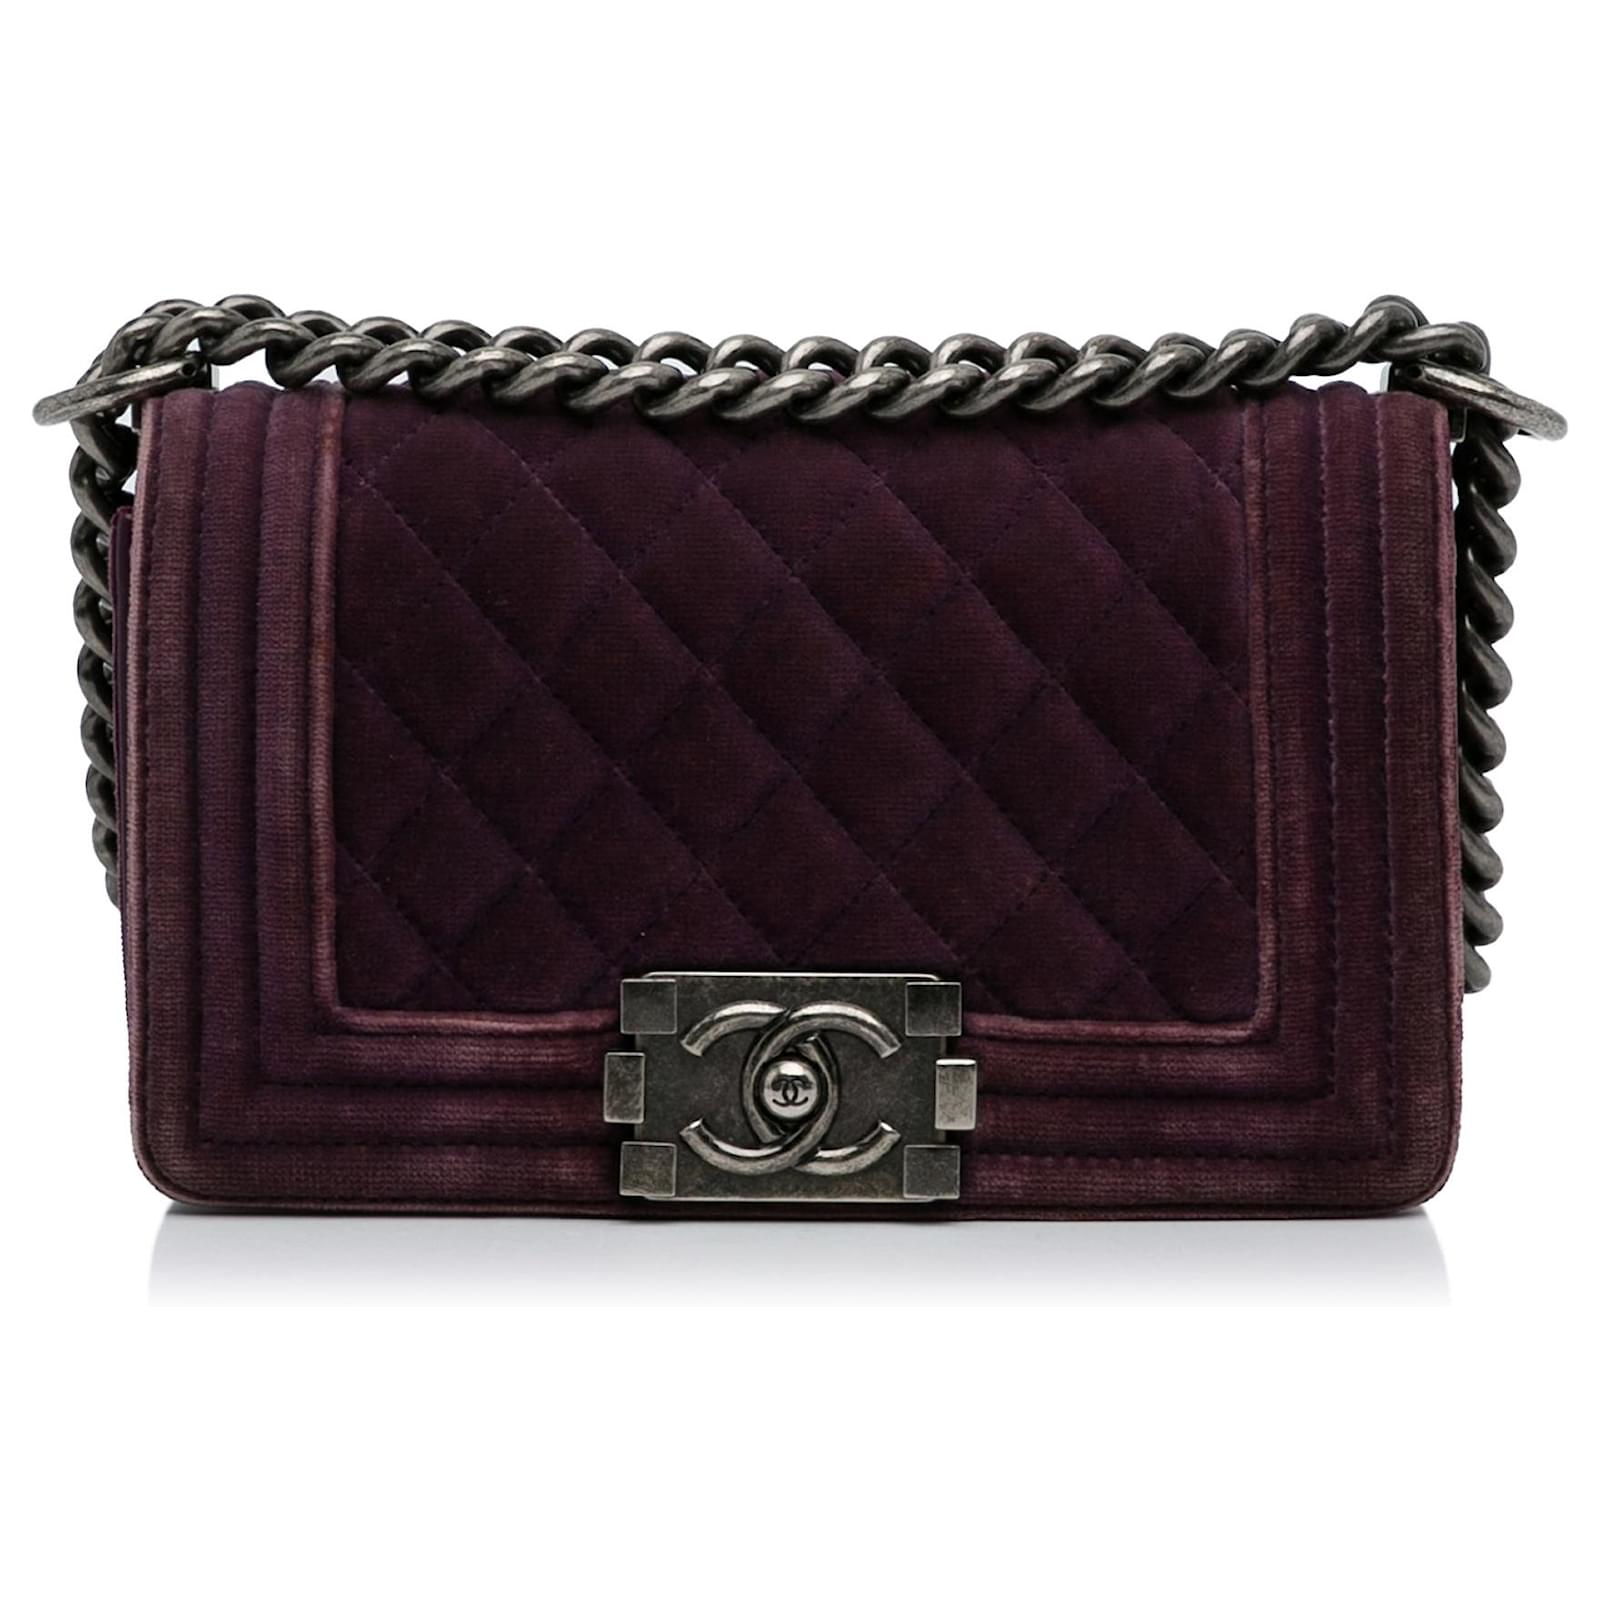 Chanel Purple Small Boy Velvet Flap Bag